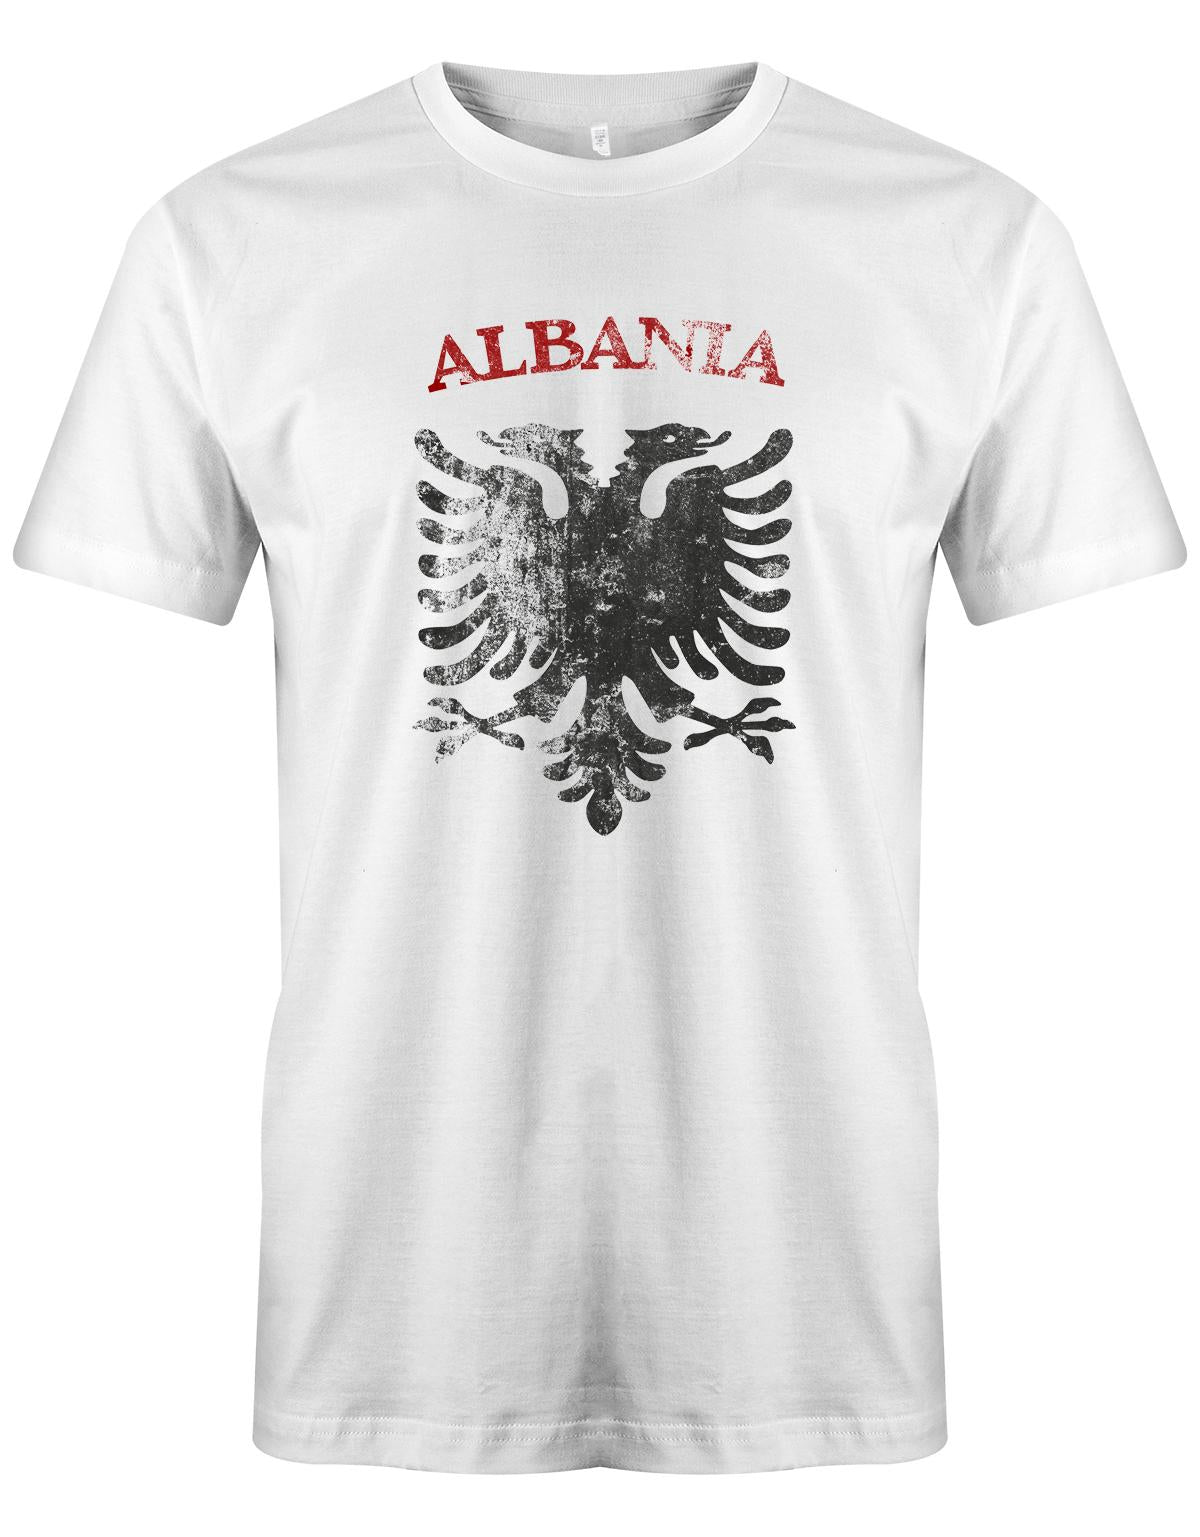 Albania - Vintage - EM WM - Fan - Albanien - Herren T-Shirt Weiss